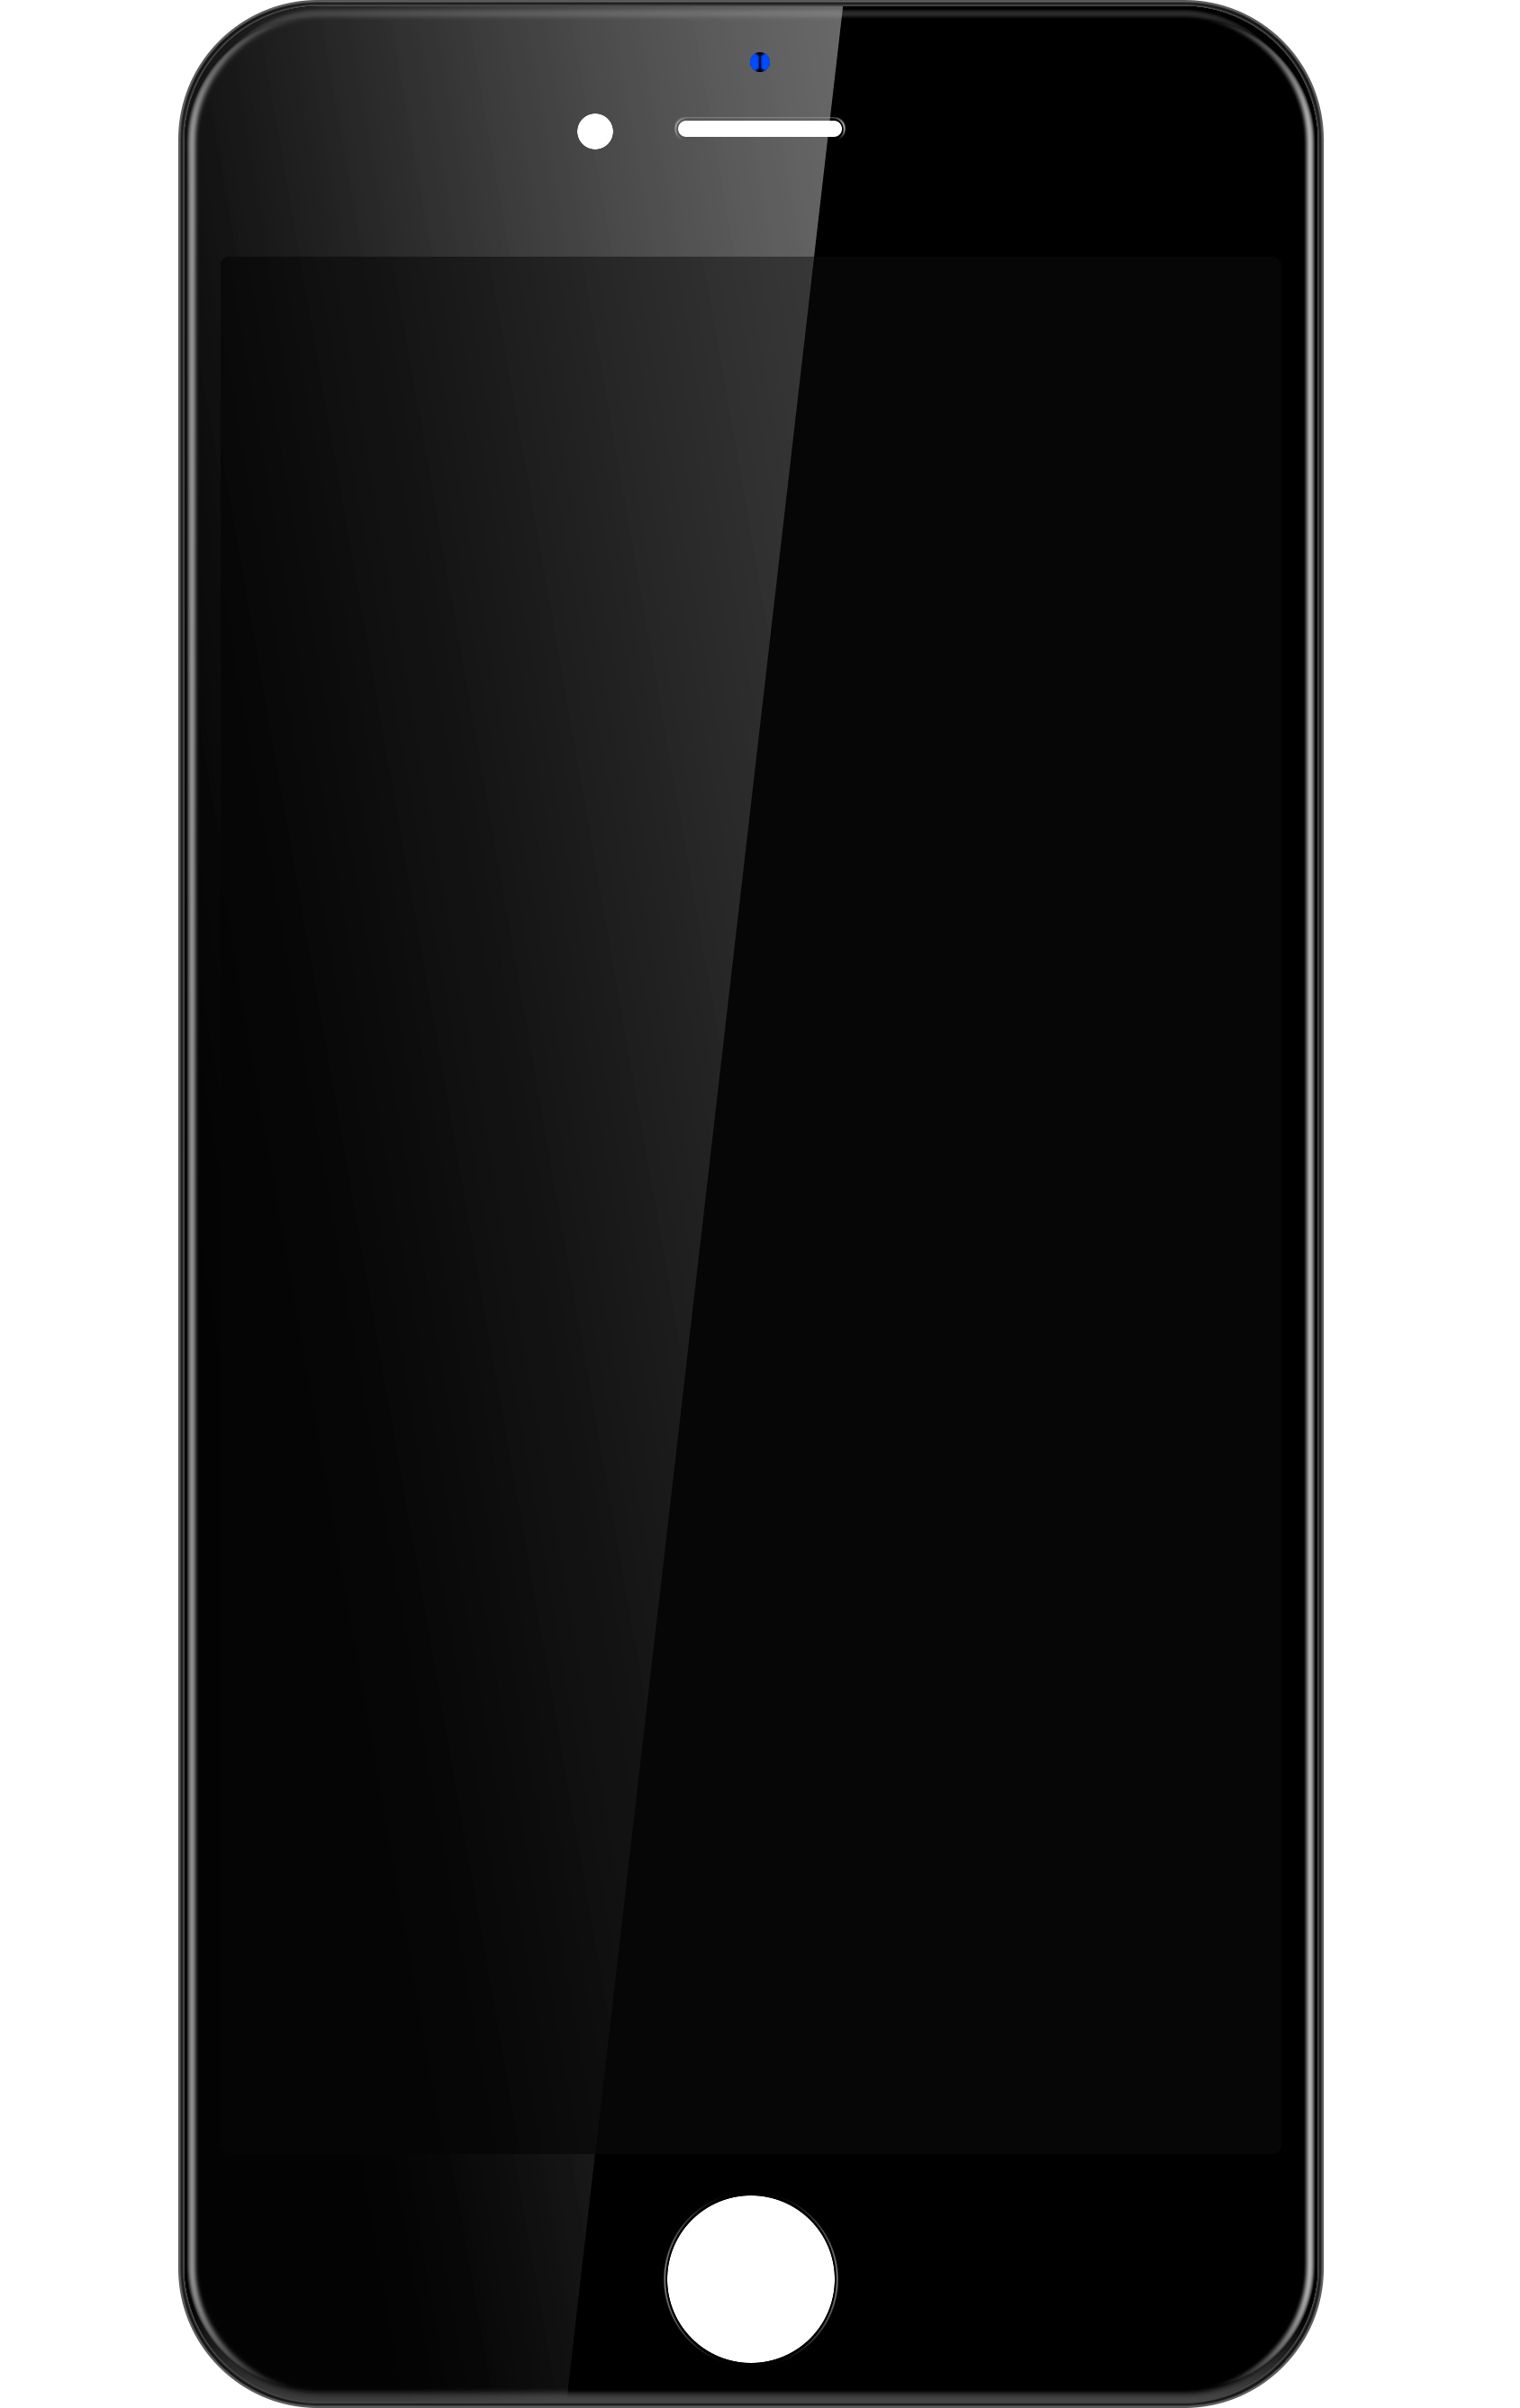 Apple iPhone 6 Black LCD Display Module (Refurbished)